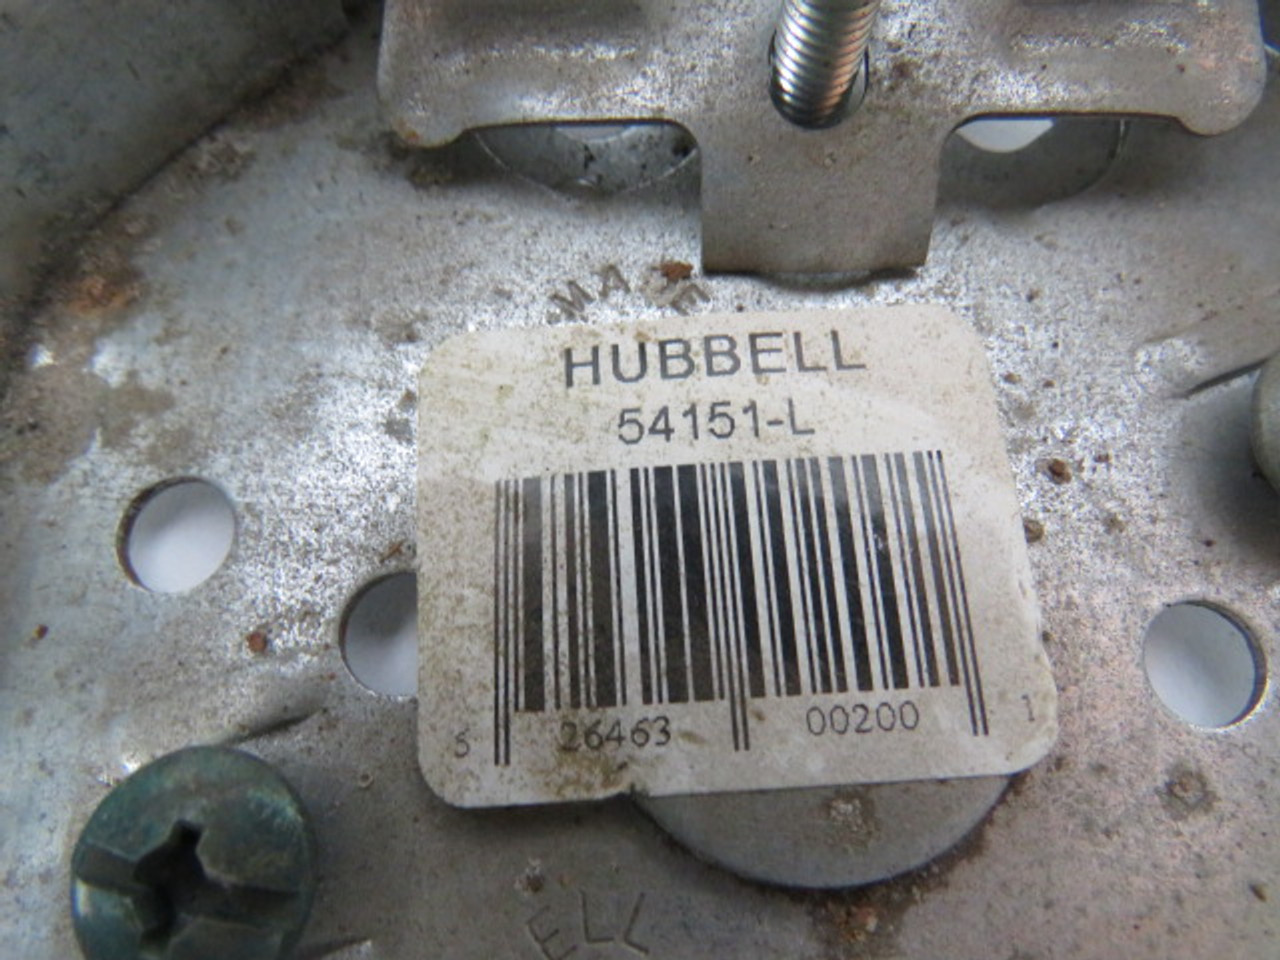 Hubbell 54151-L Octagonal Conduit Box 15cu in 4"L/WX1-1/2"D USED